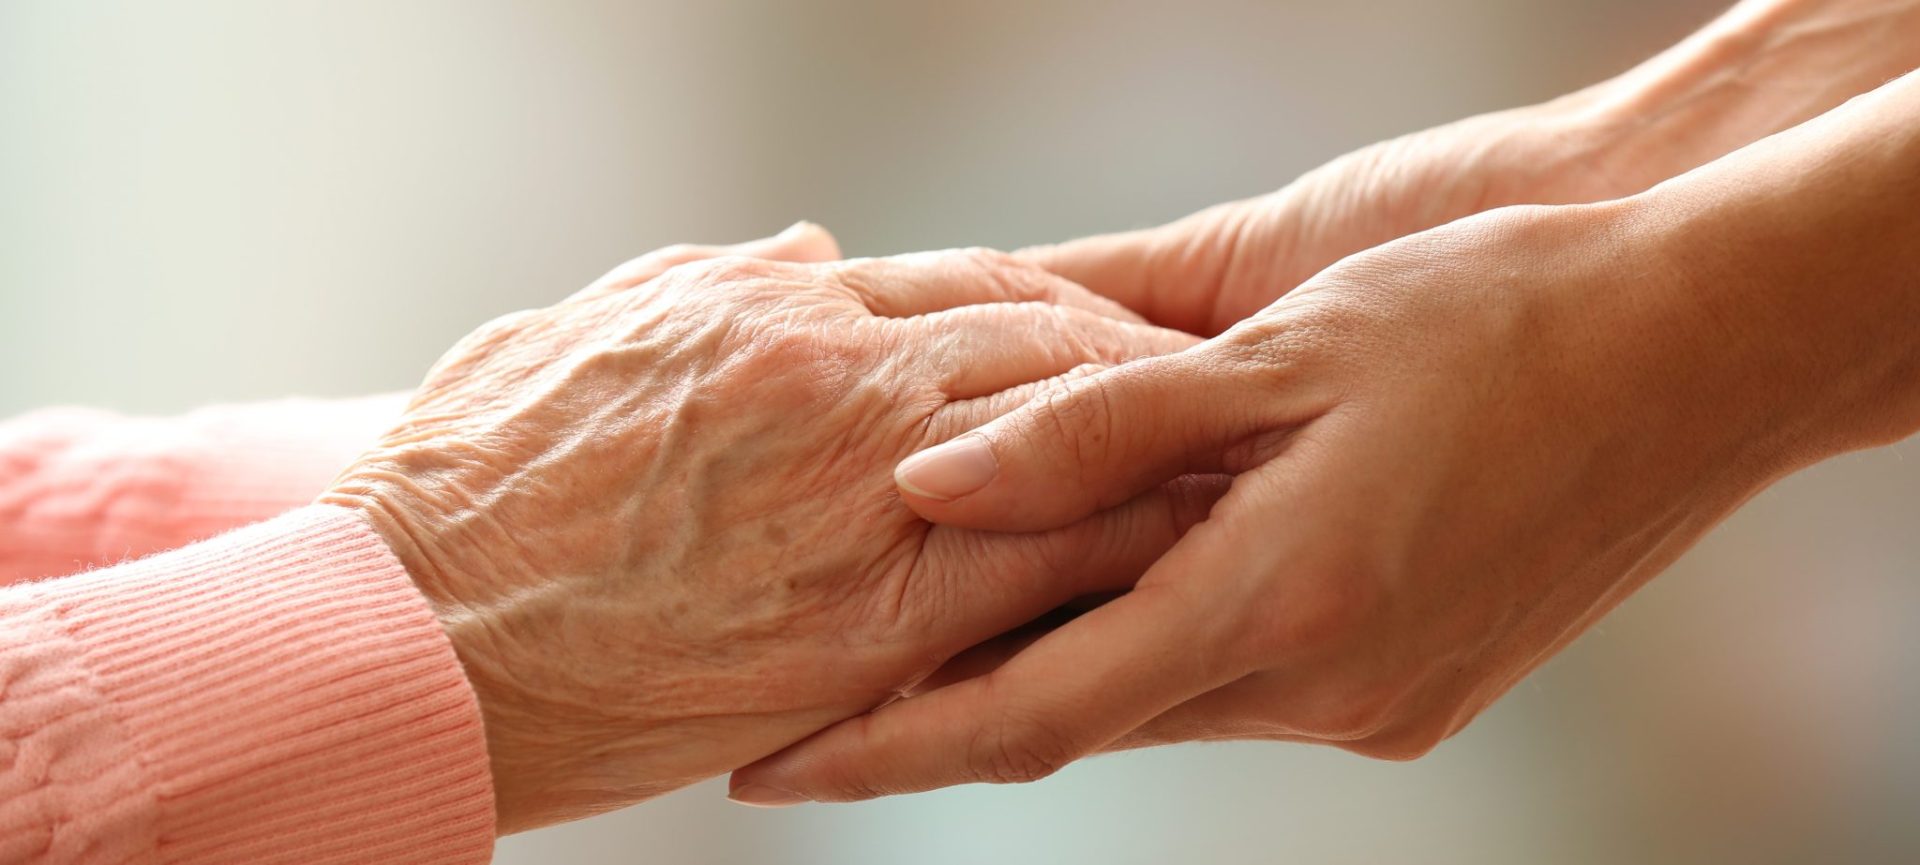 Palliative Care - holding hands